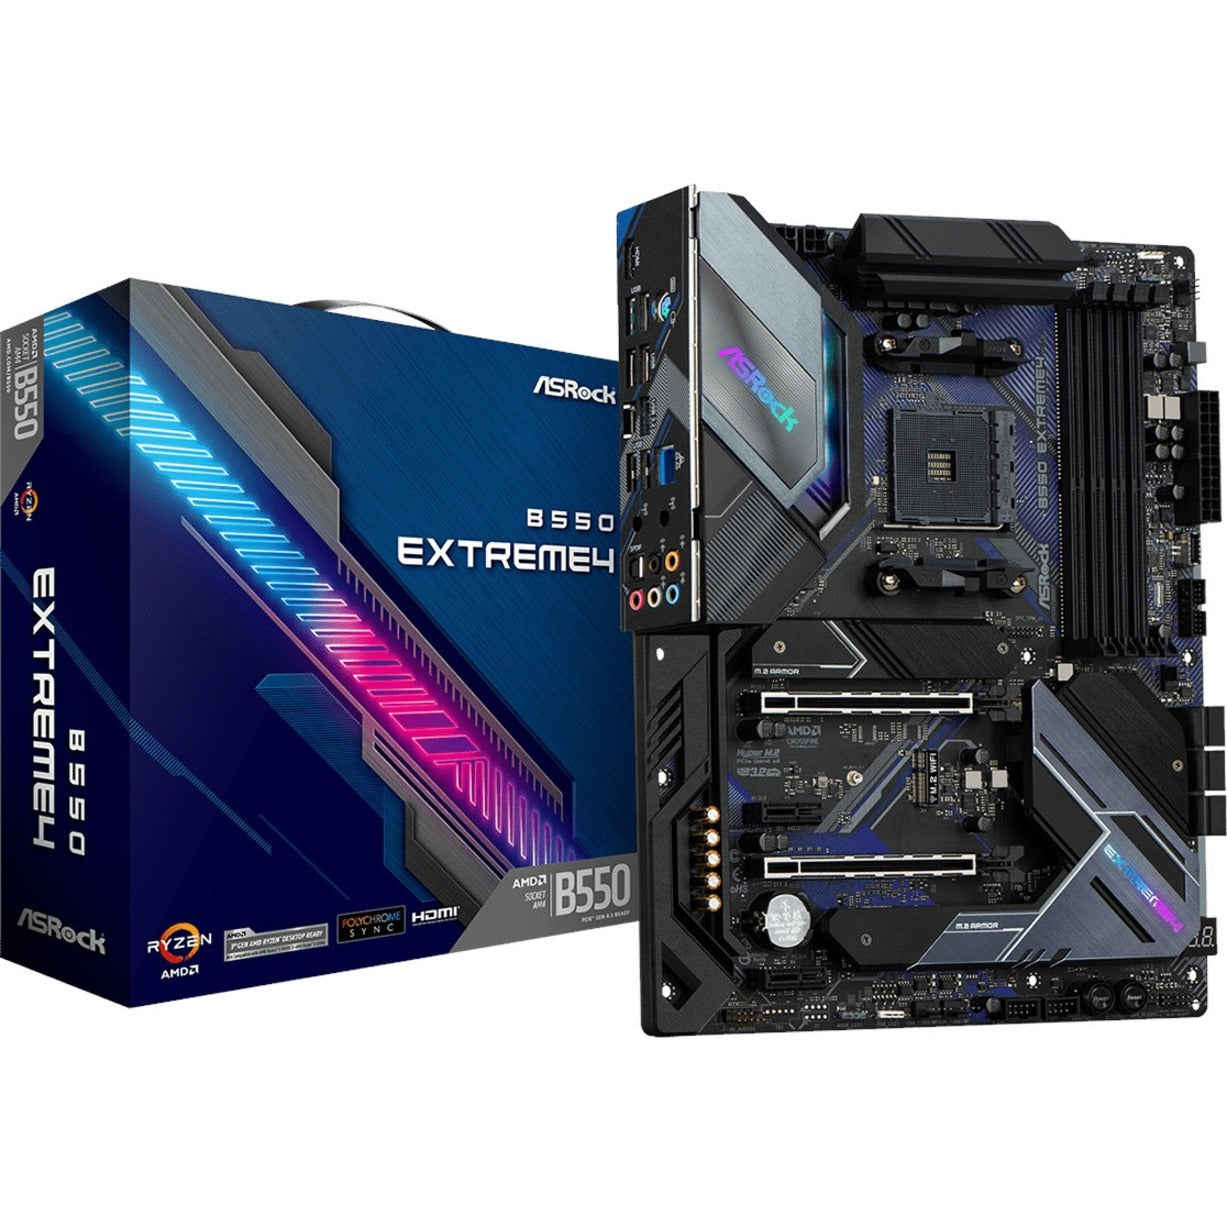 ASRock B550 EXTREME4 B550 Extreme4 Desktop Motherboard, AMD Ryzen Compatible, ATX Form Factor